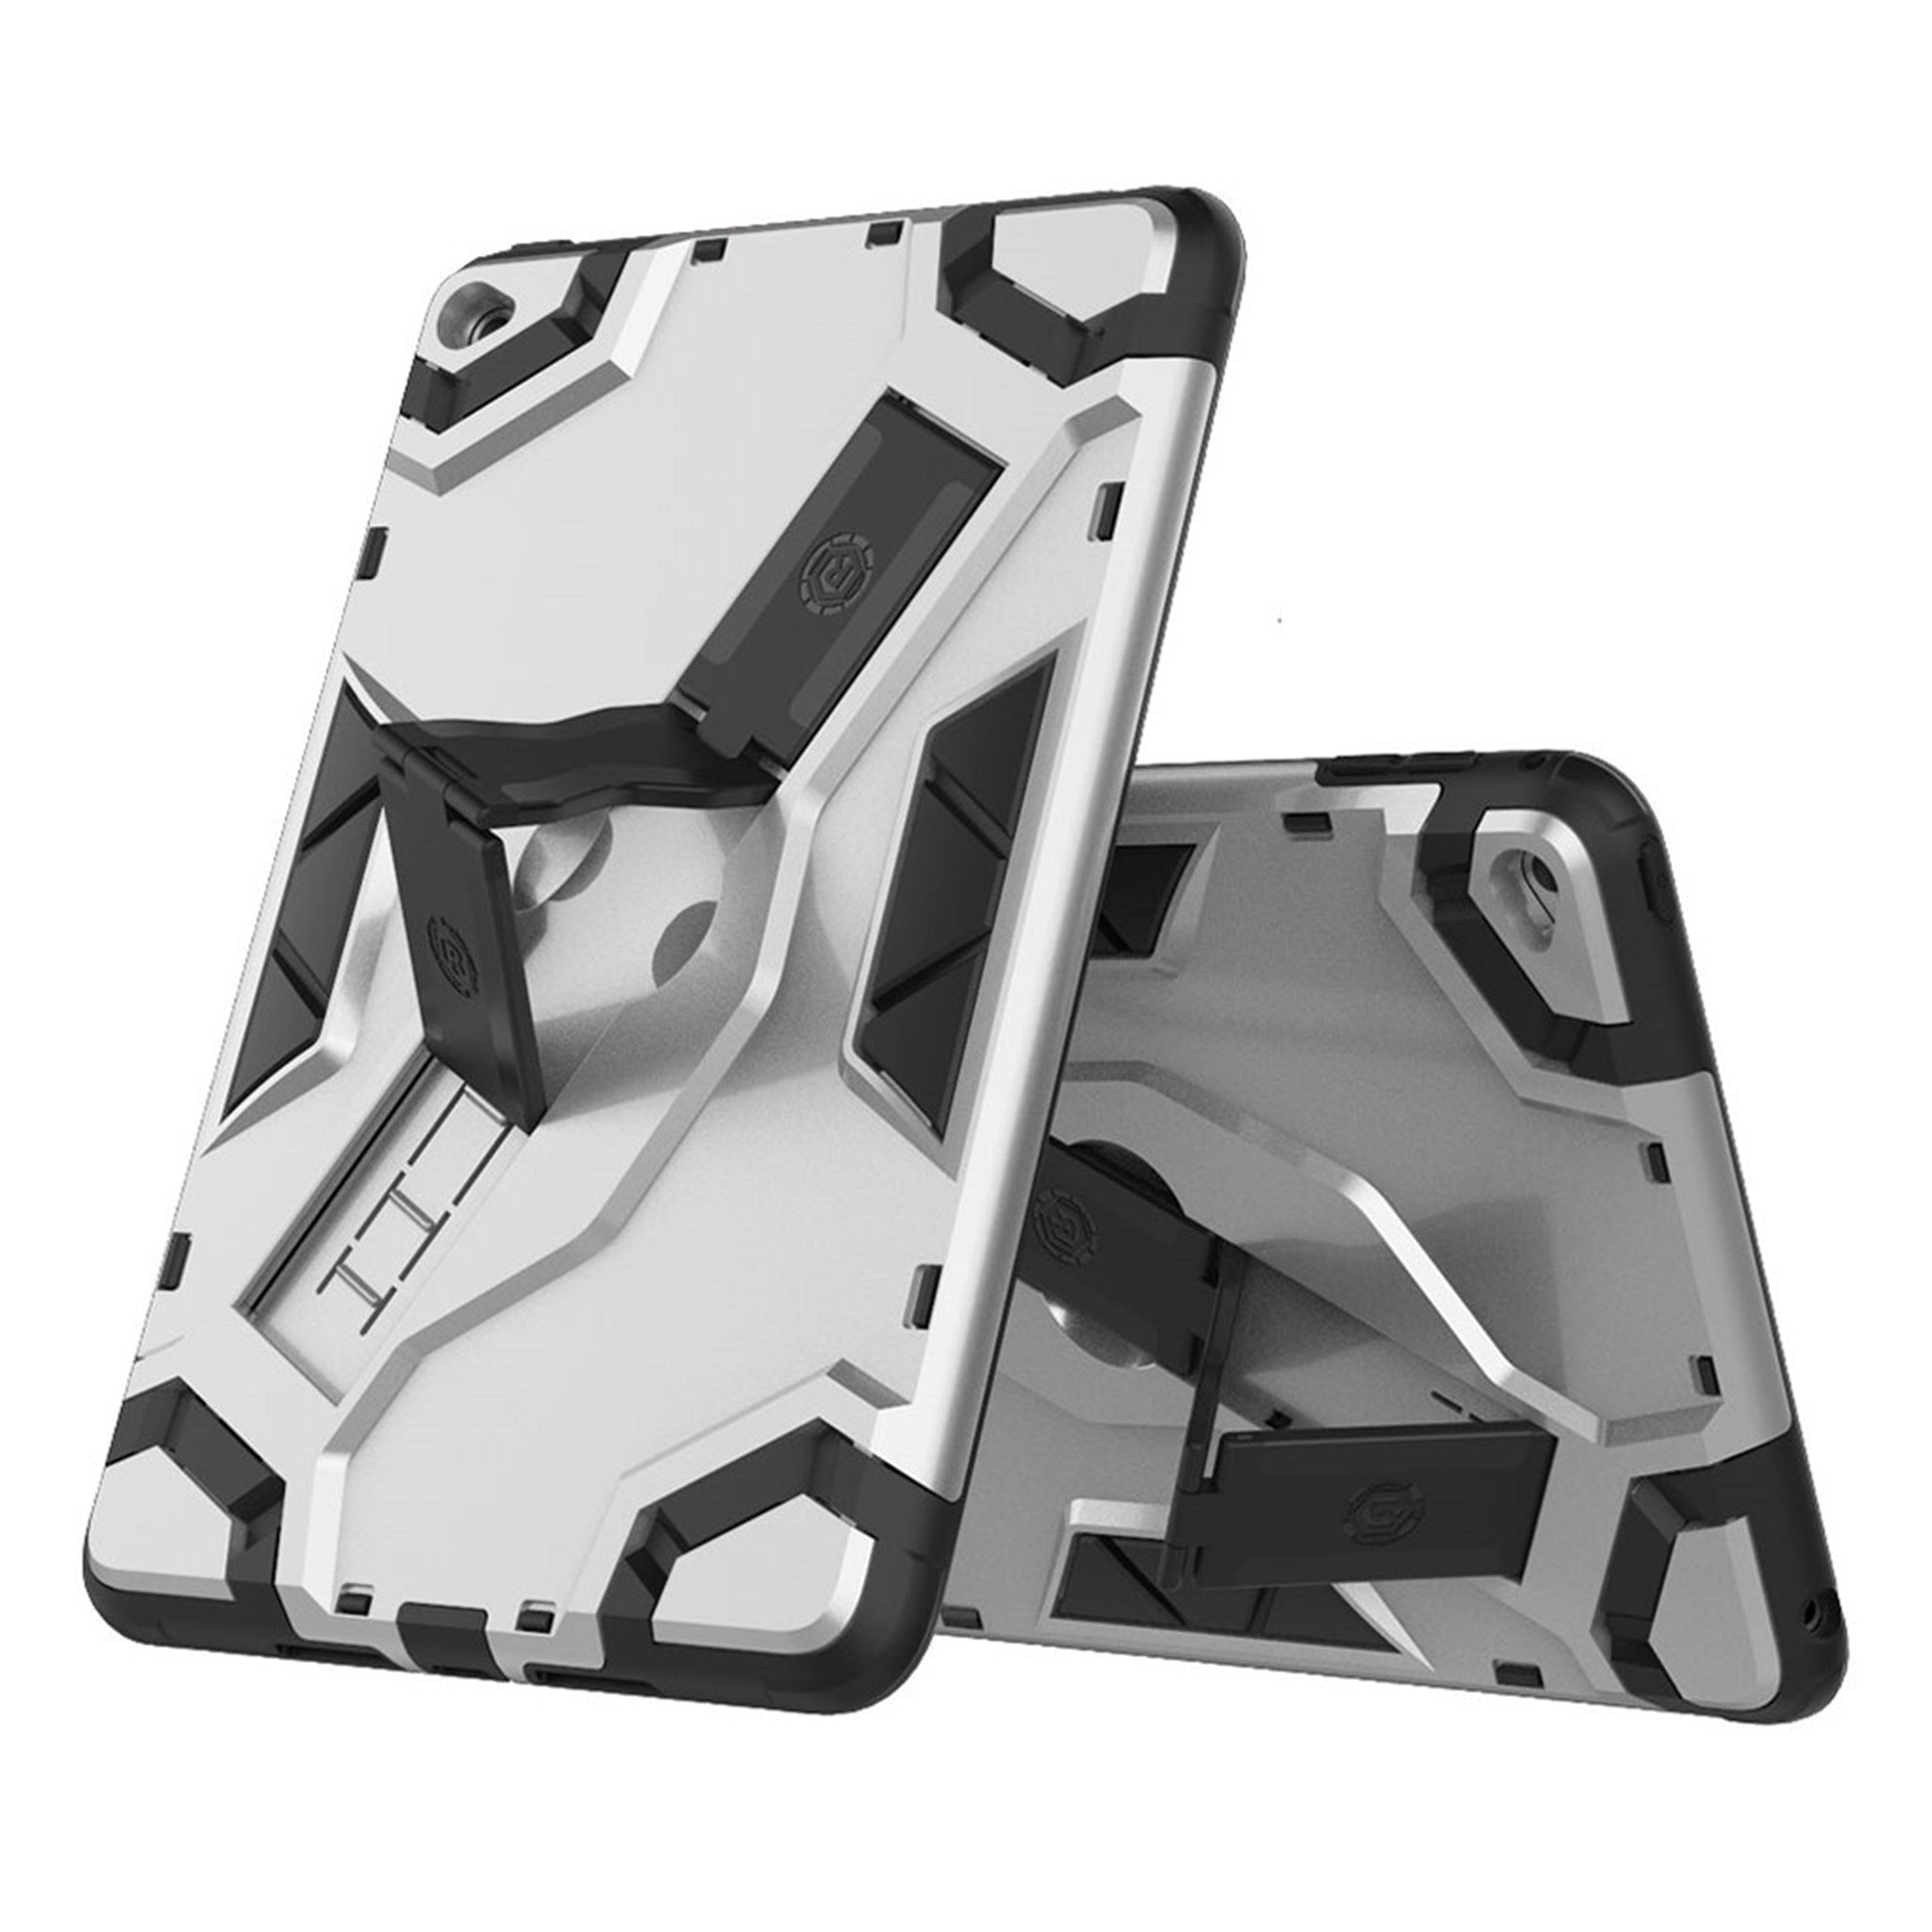 iPad Mini (2019) shield style shockproof case - Silver